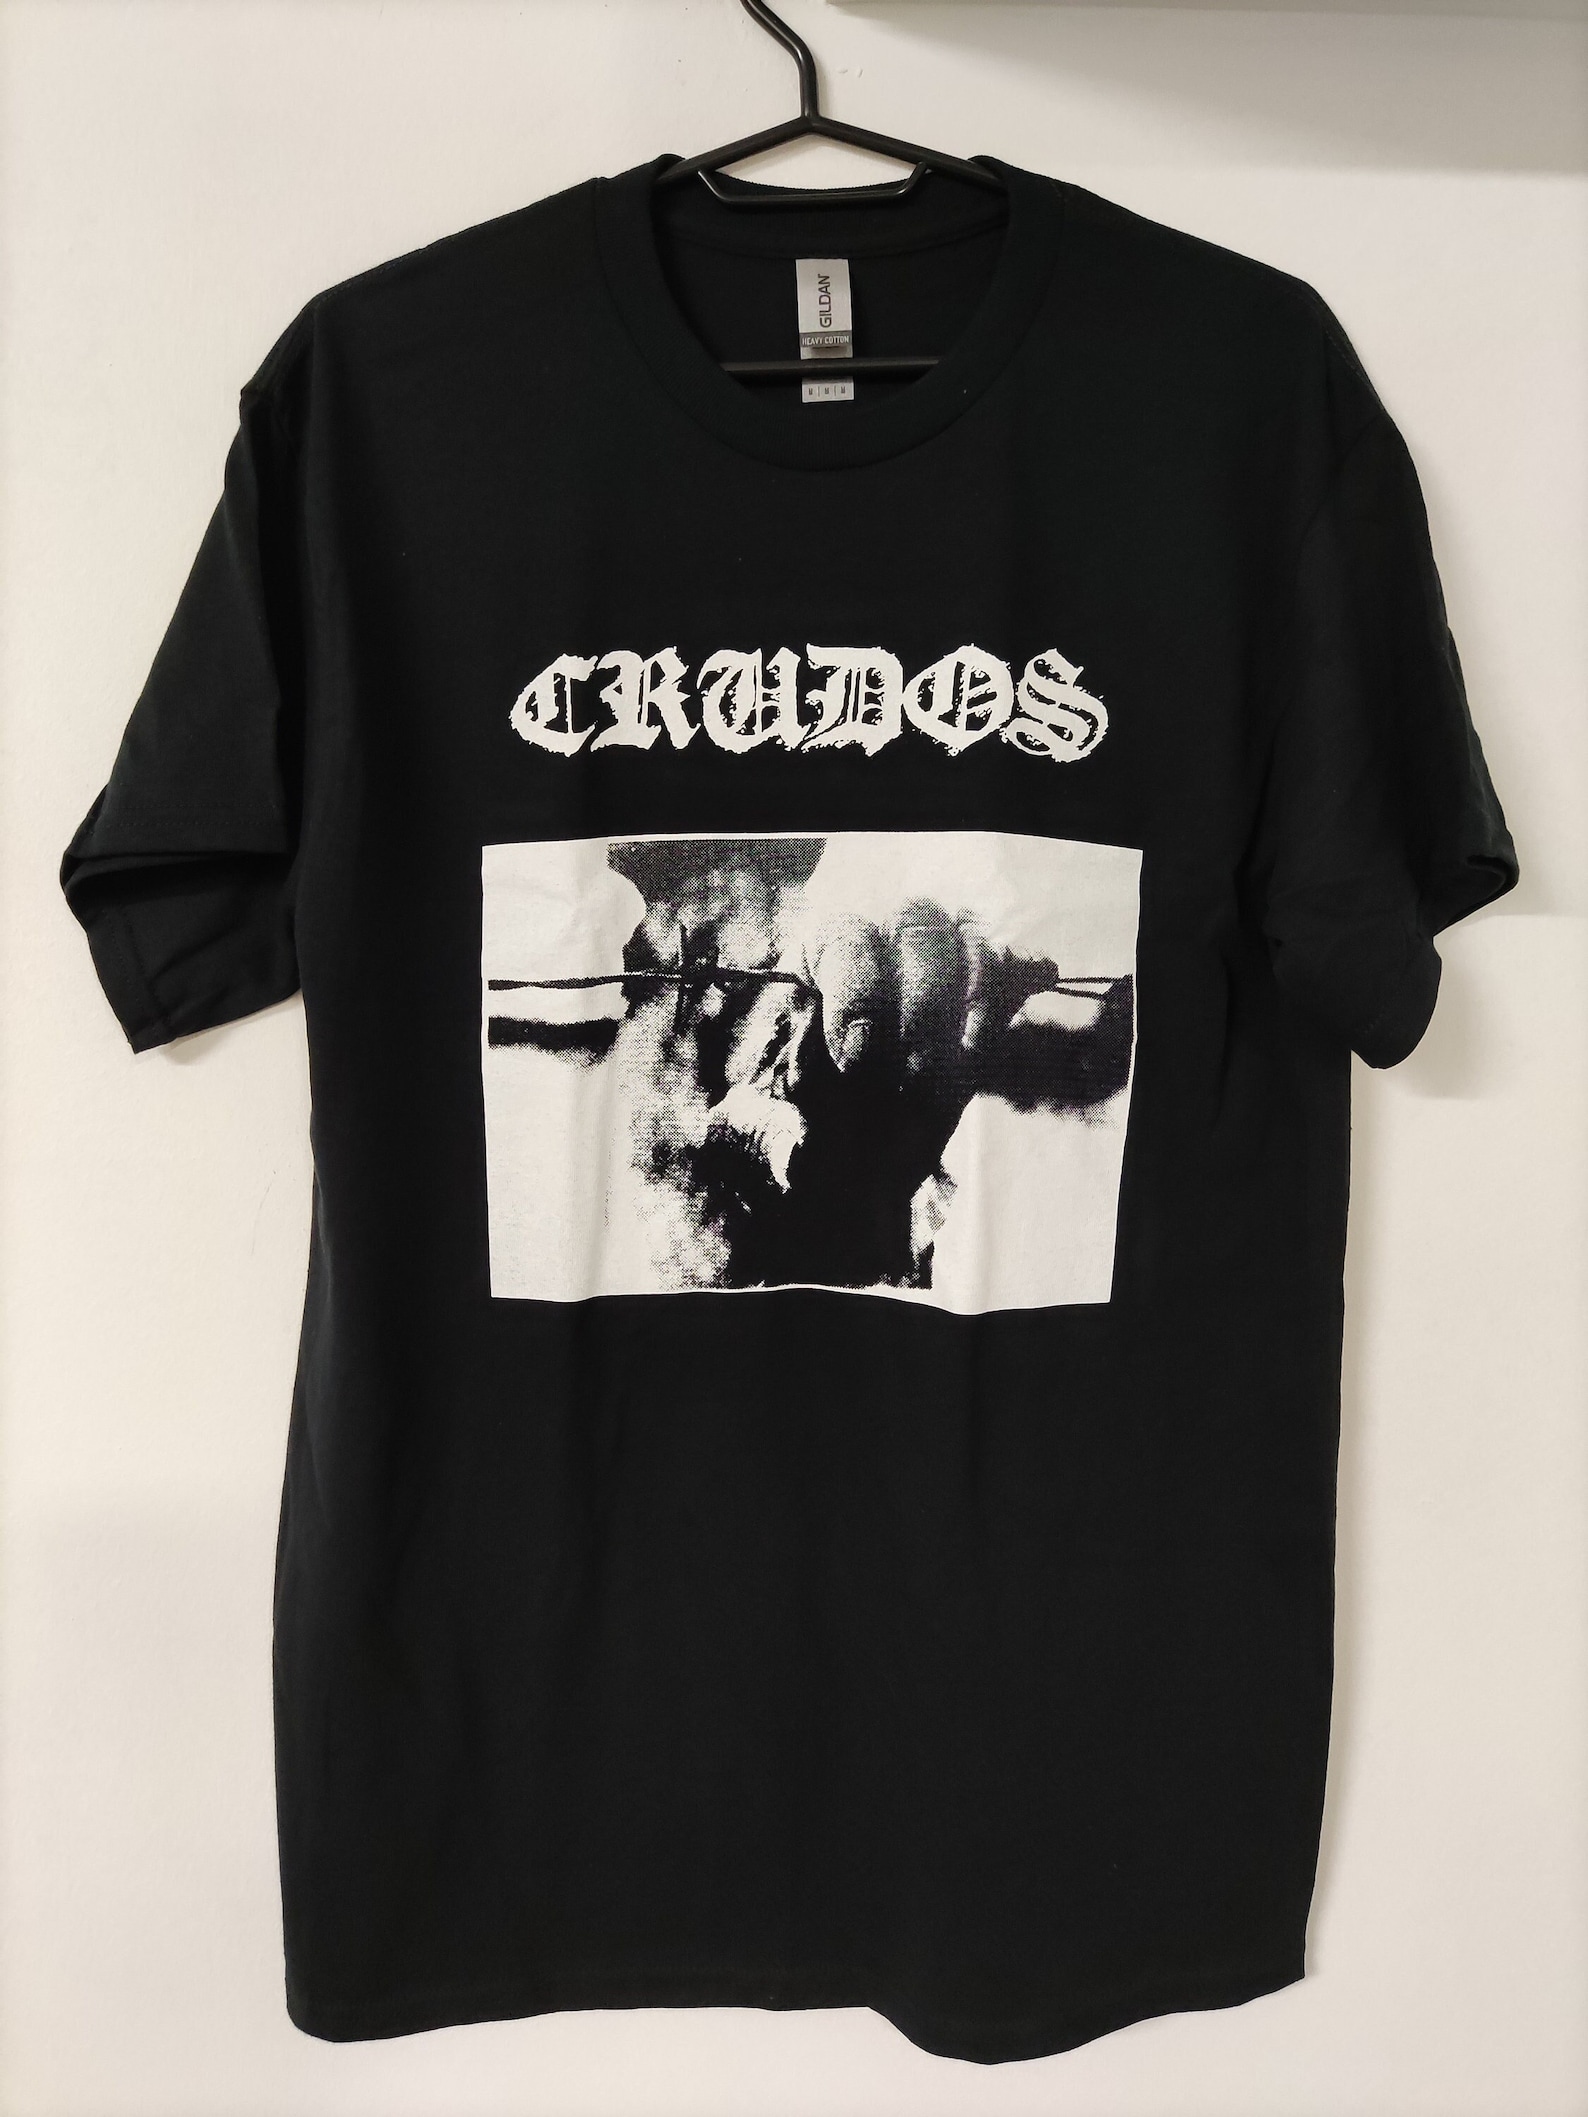 LOS CRUDOS T-shirt Punk Hardcore Infest Mk Ultra Spazz Dropdead Limp ...